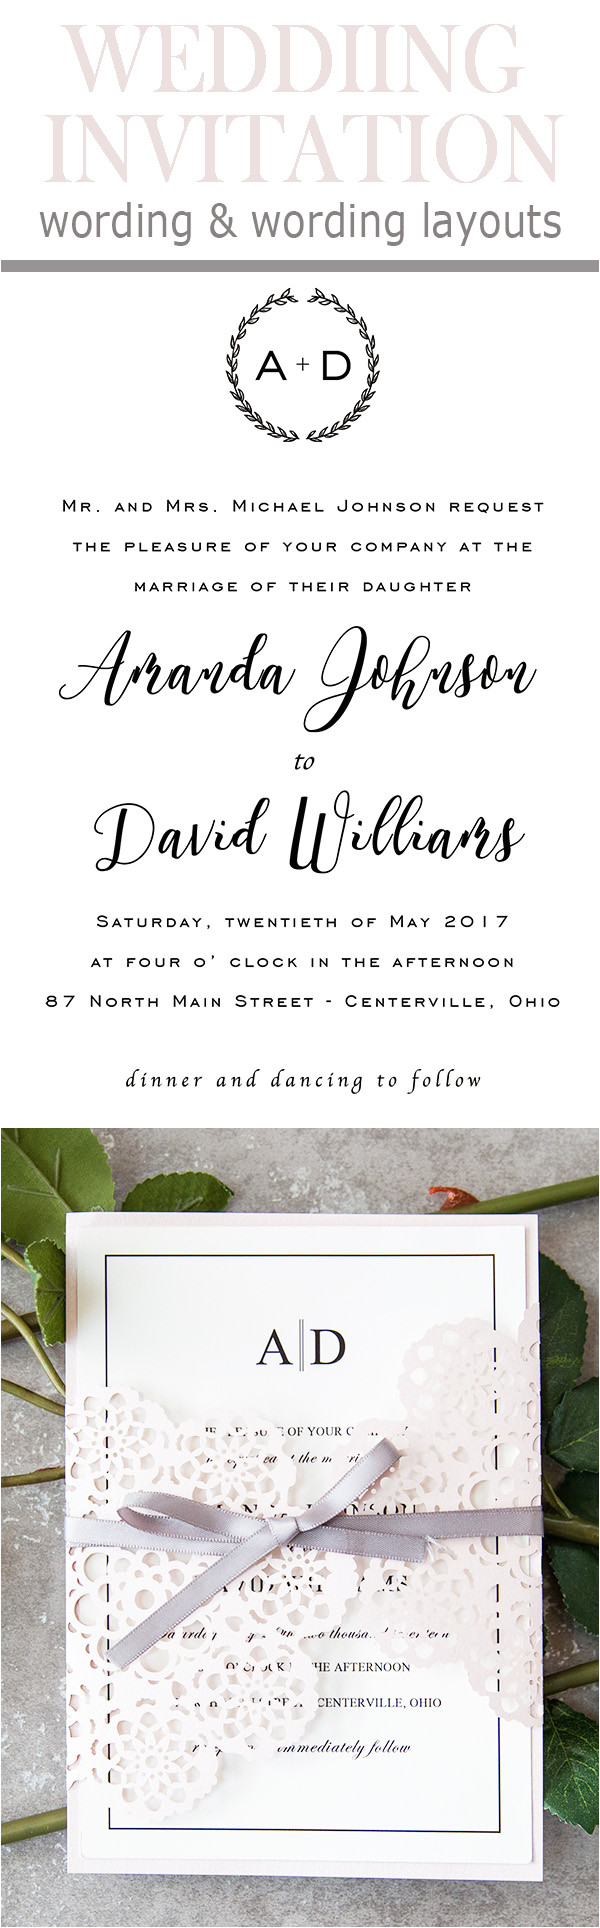 20 popular wedding invitation wording diy templates ideas